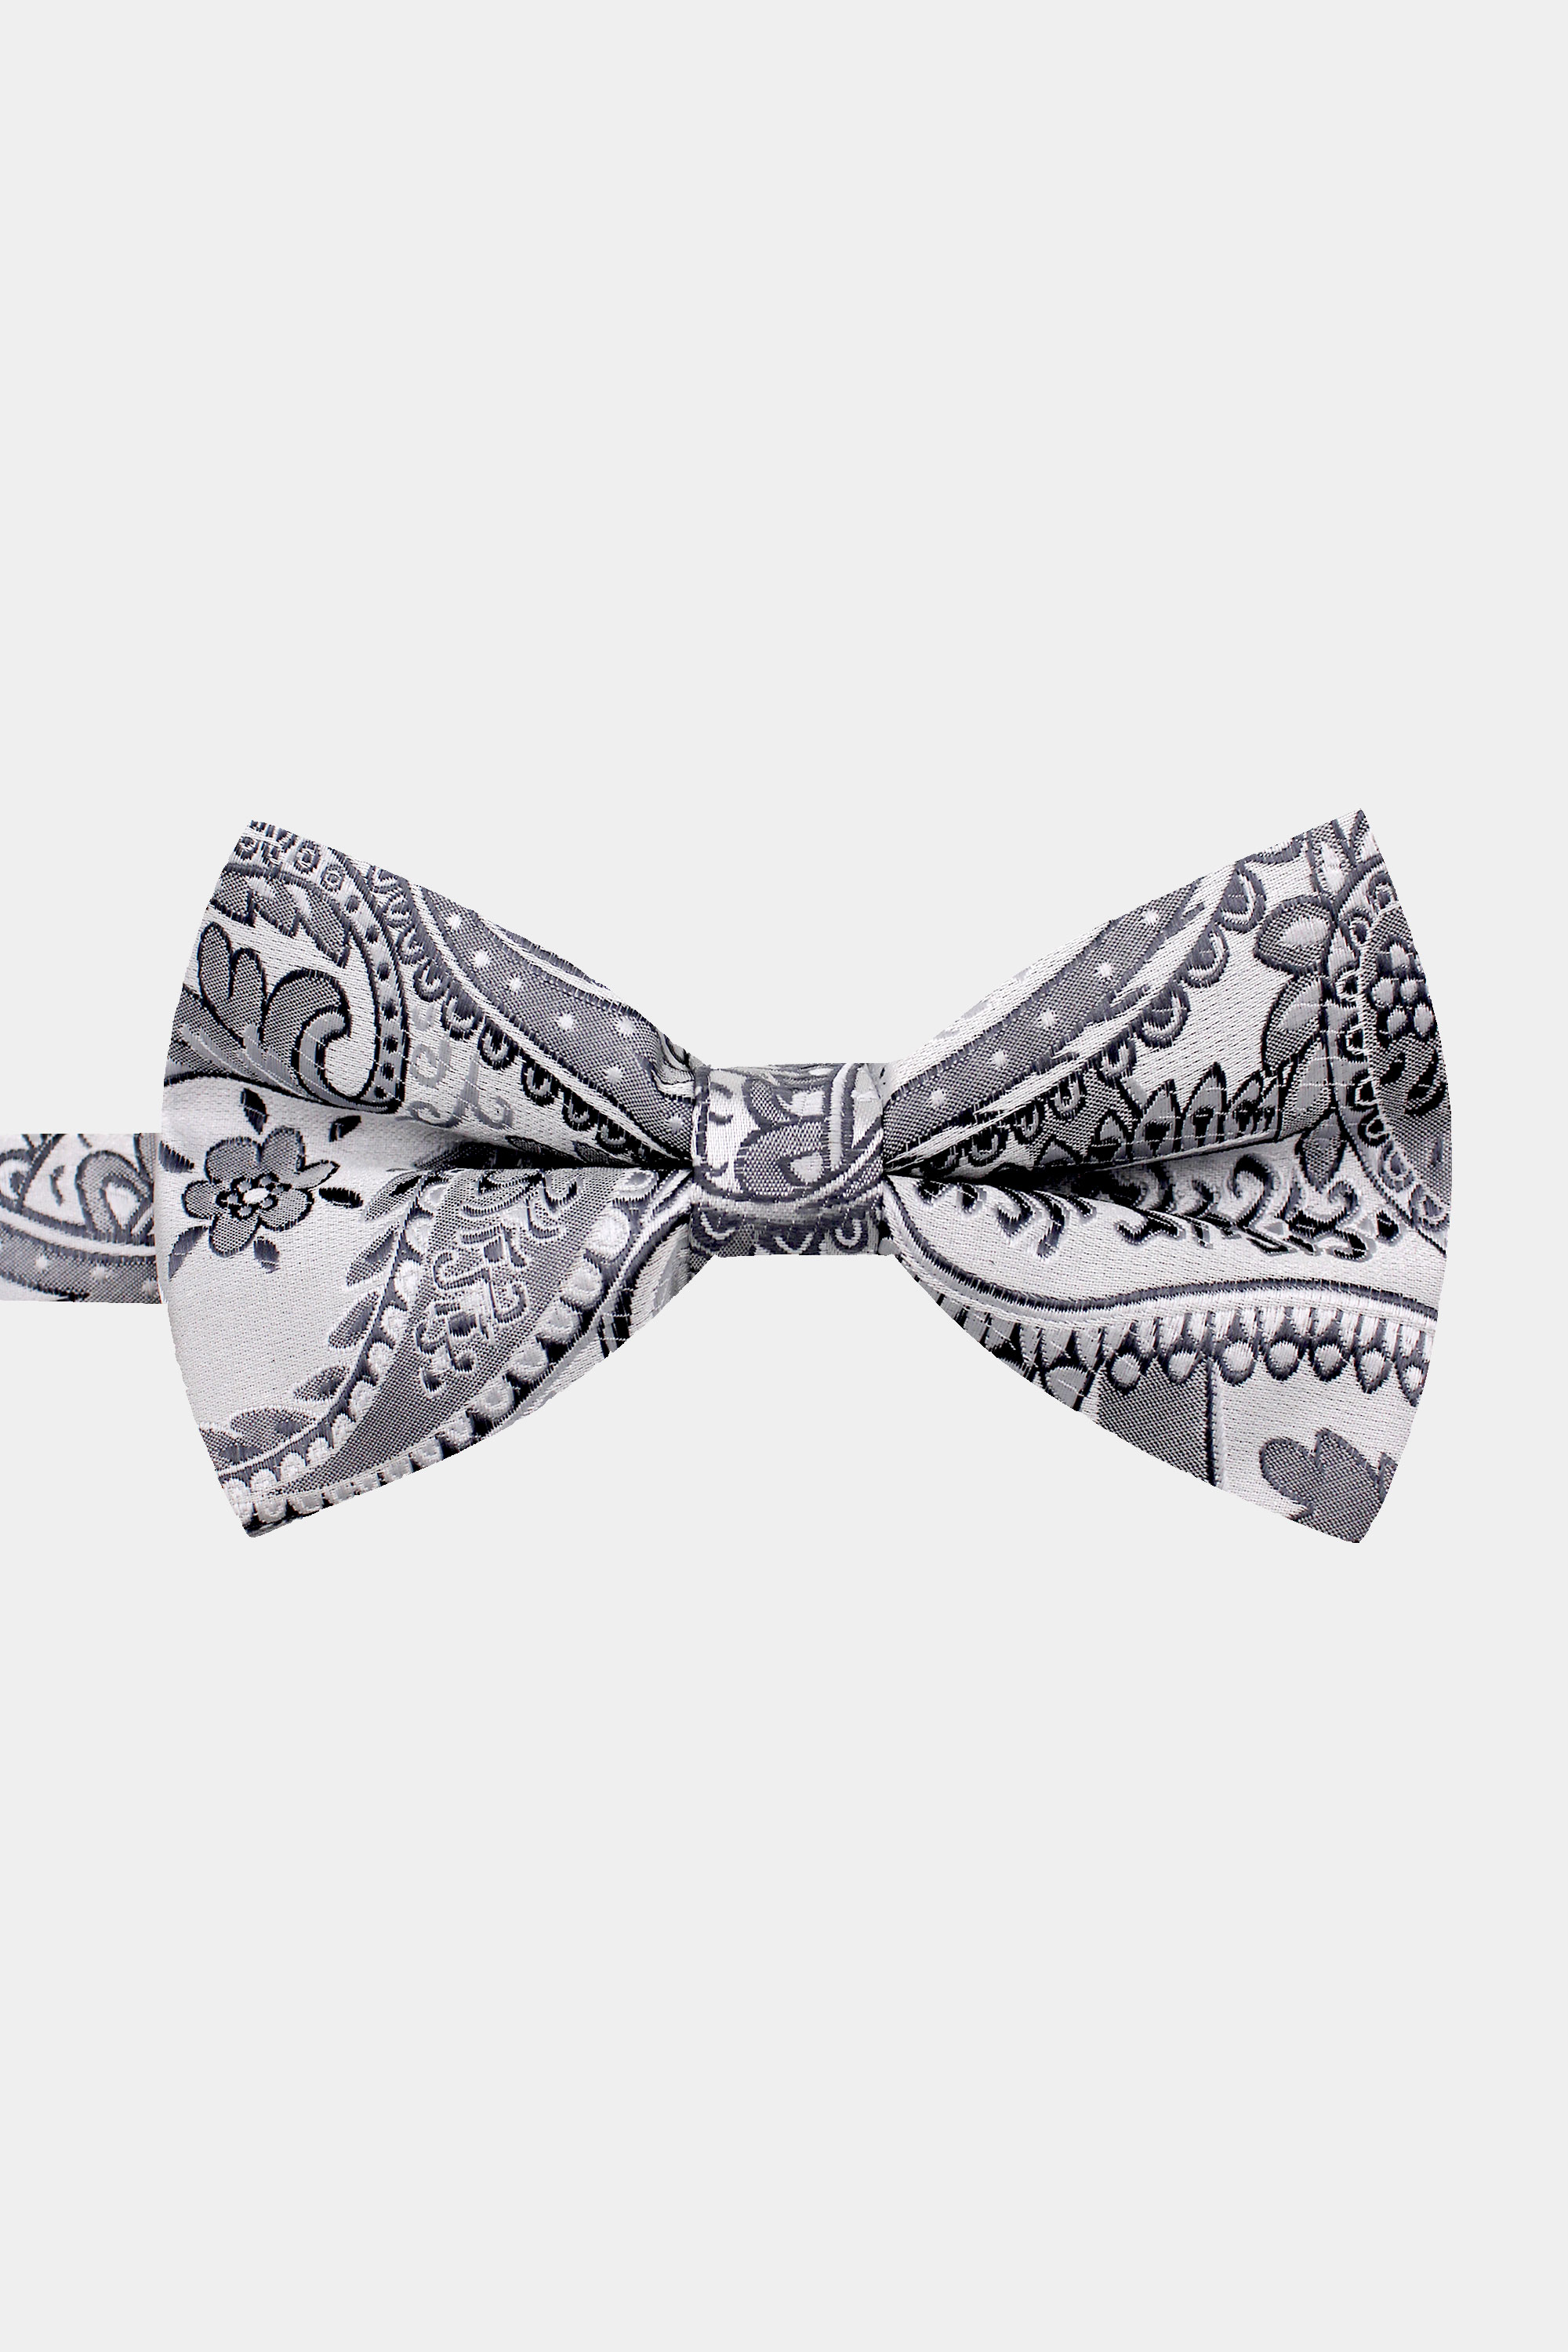 Paisley-Silver-Bow-Tie-from-Gentlemansguru.com